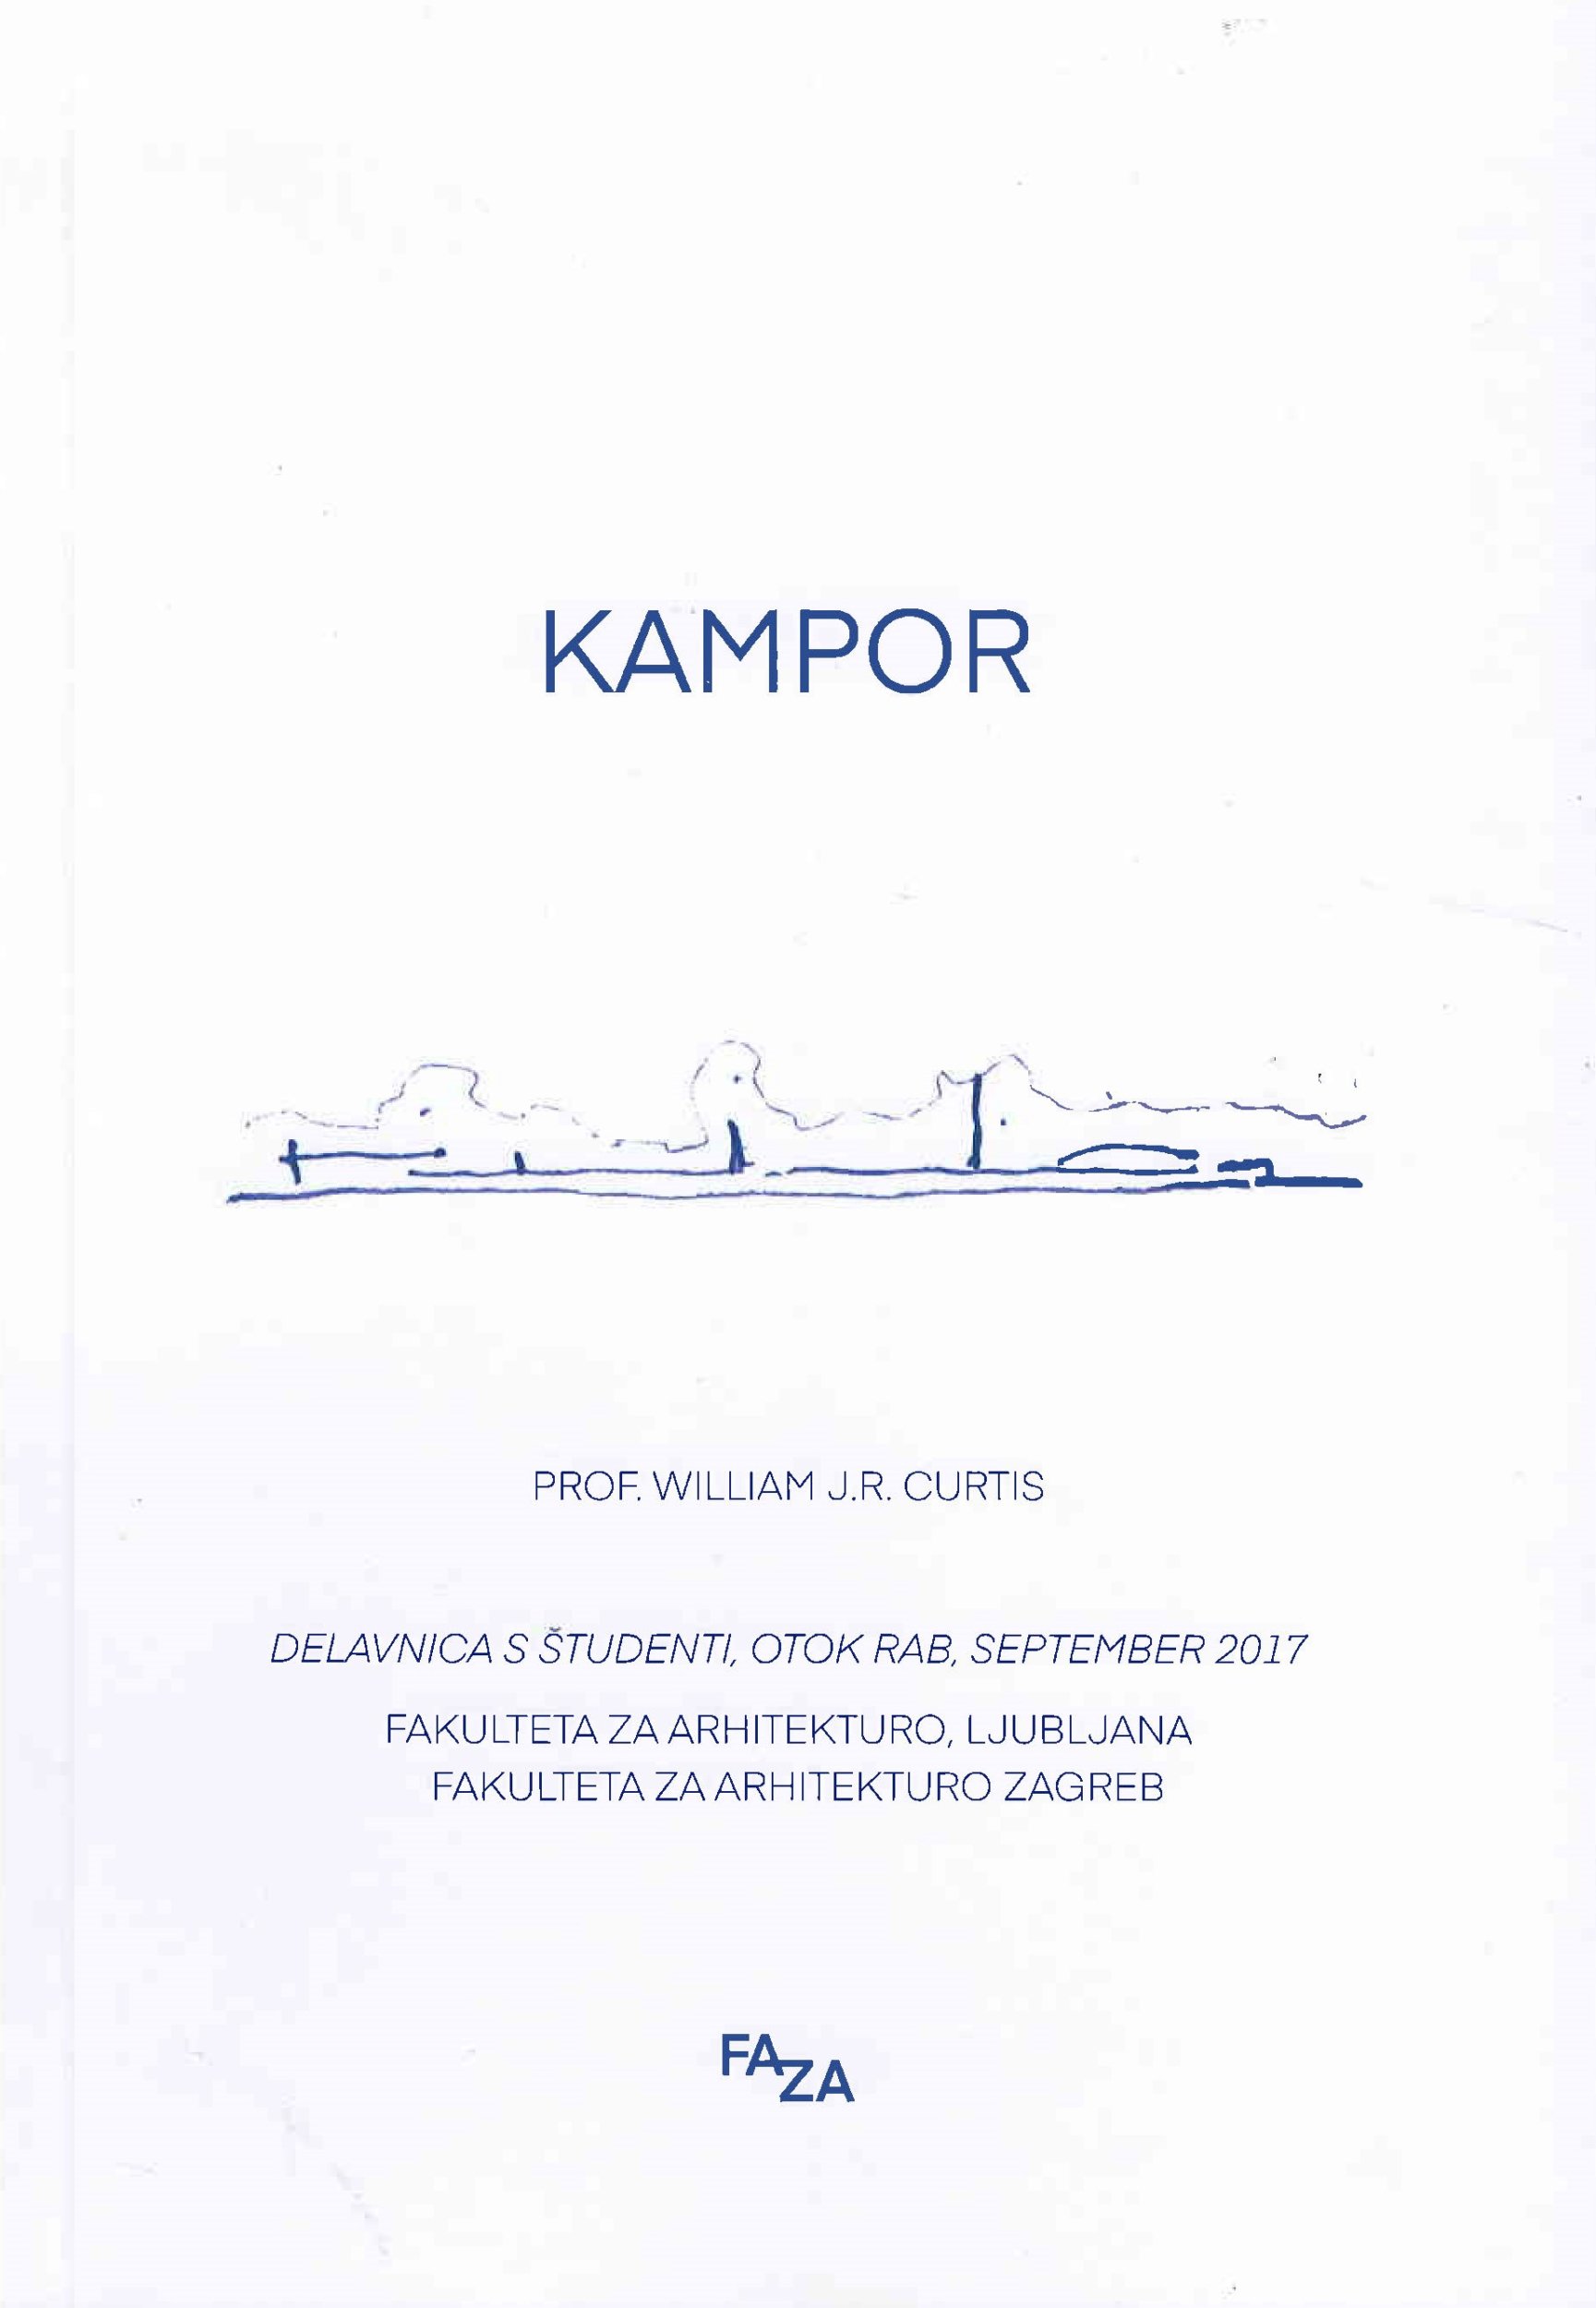 Kampor : workshop, Rab, autumn 2017